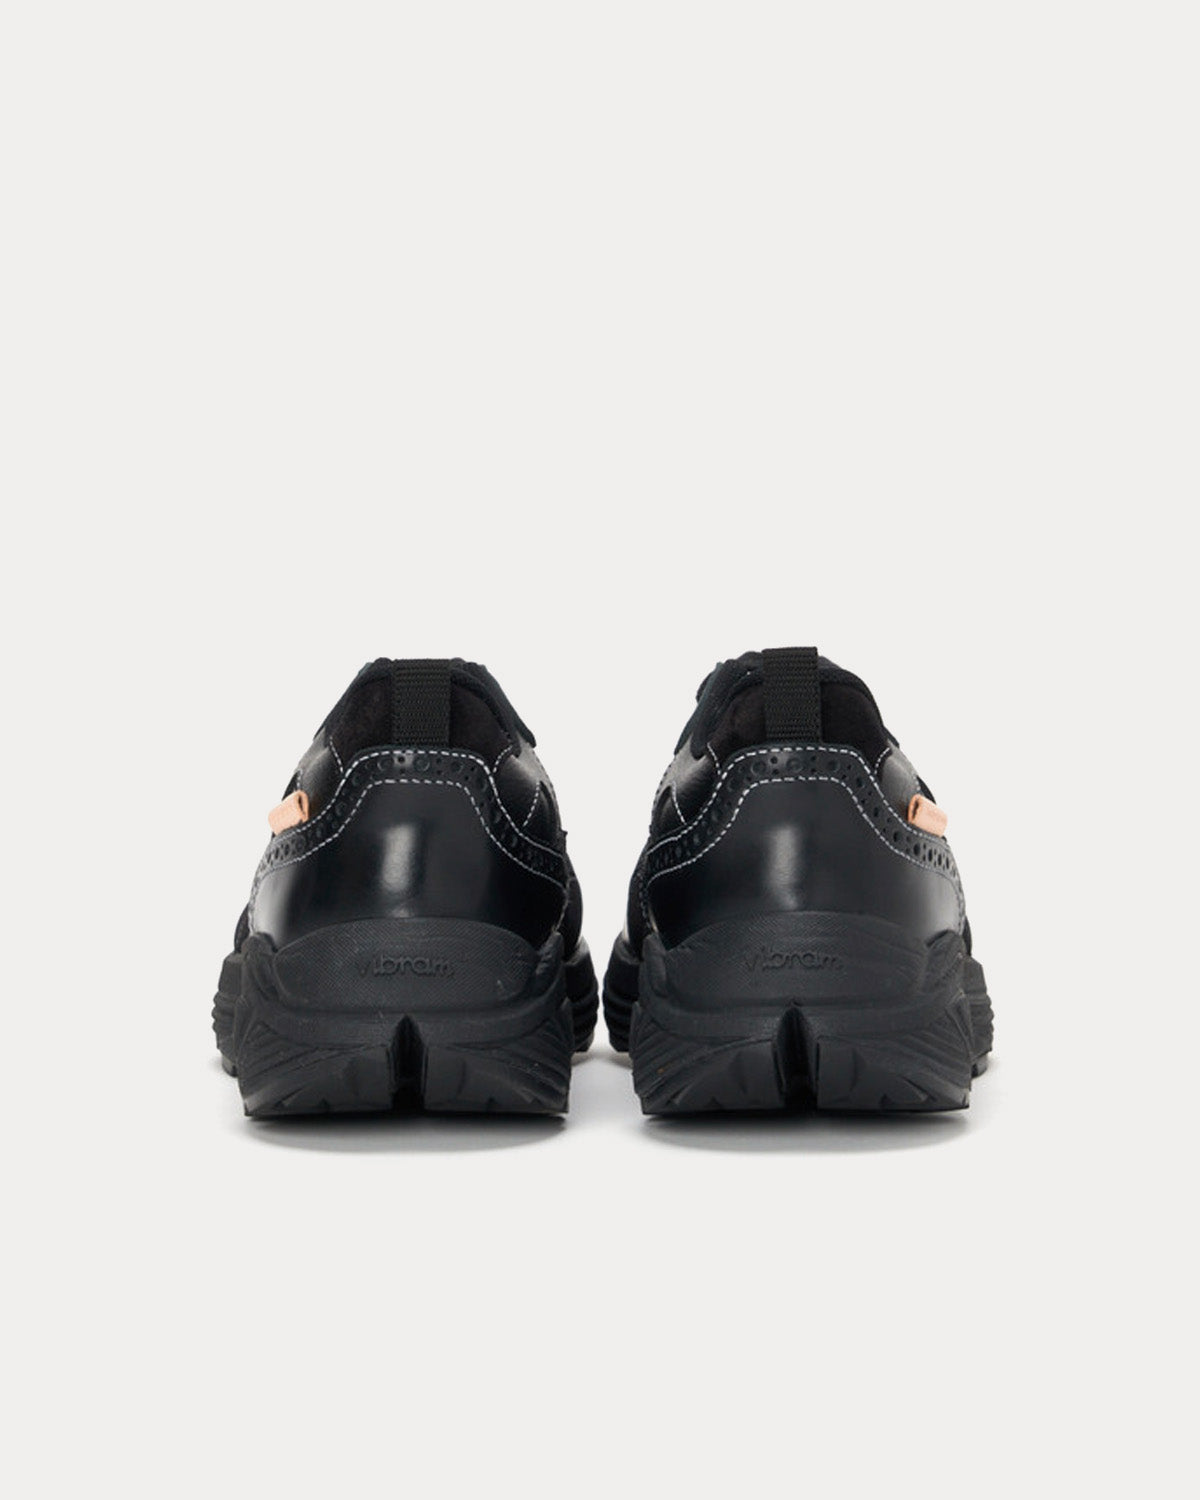 Hender Scheme Polar Black / White Low Top Sneakers - Sneak in Peace